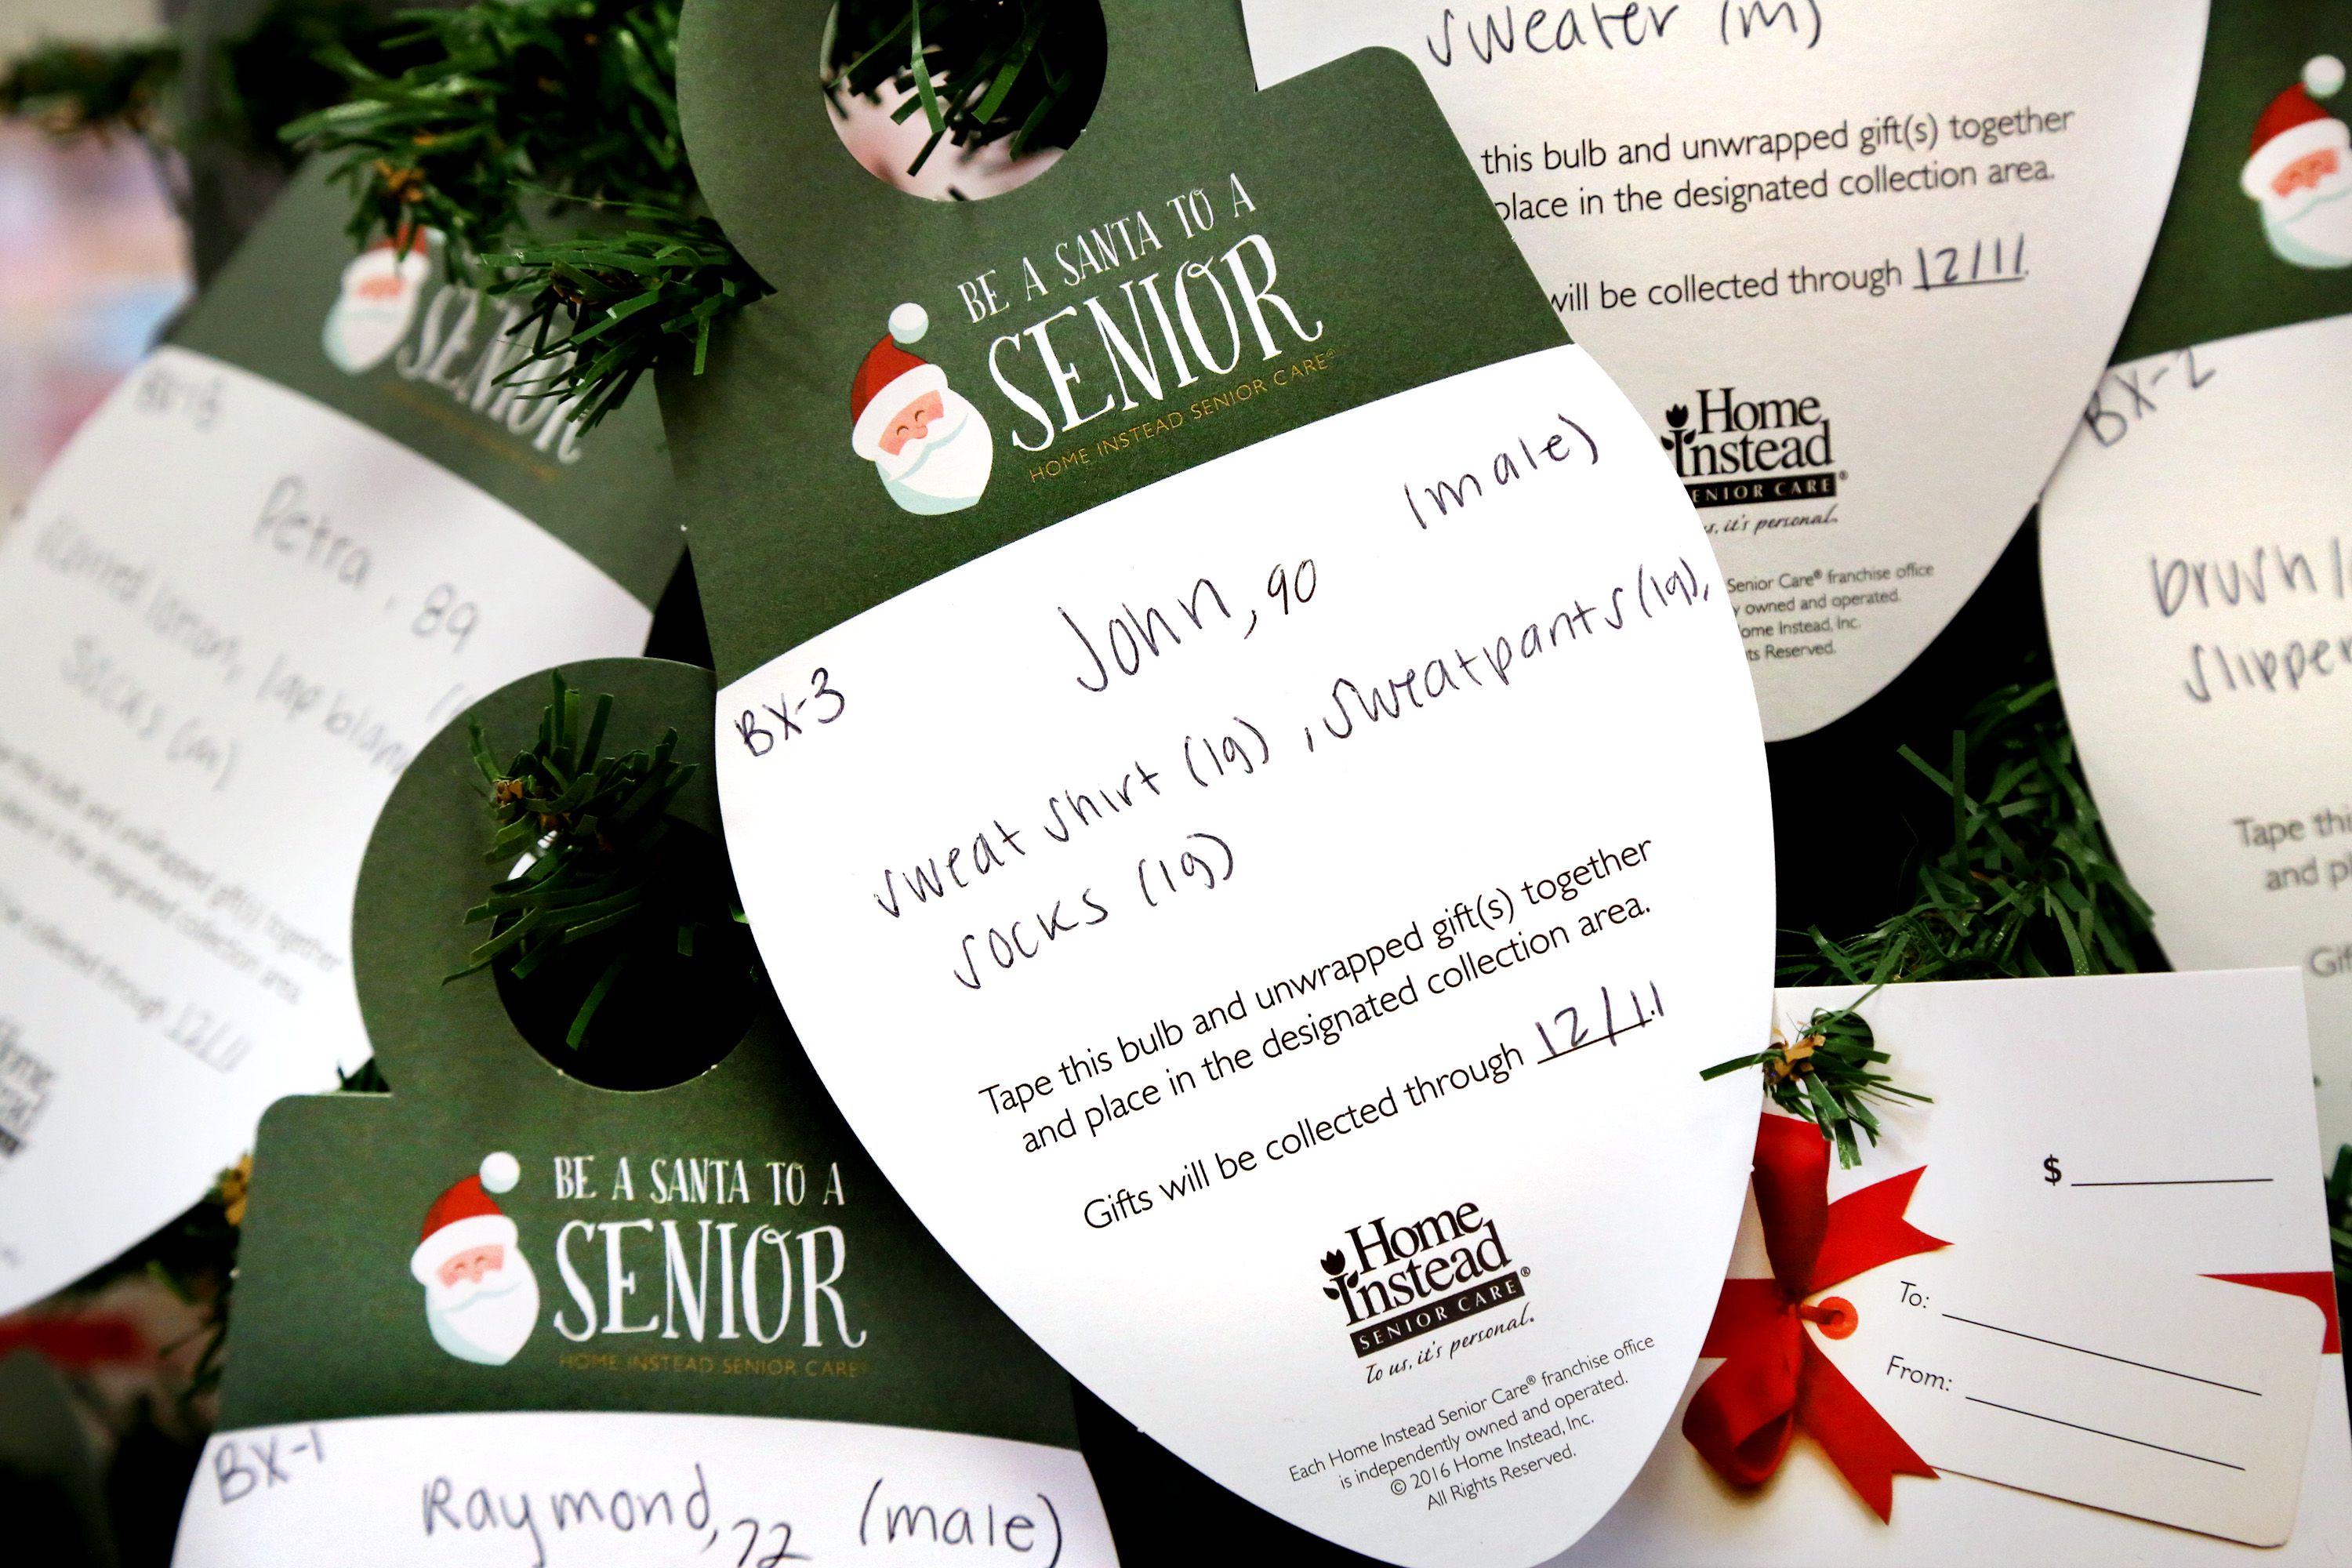 Holiday Gift Guide for Seniors - Superior Senior Care